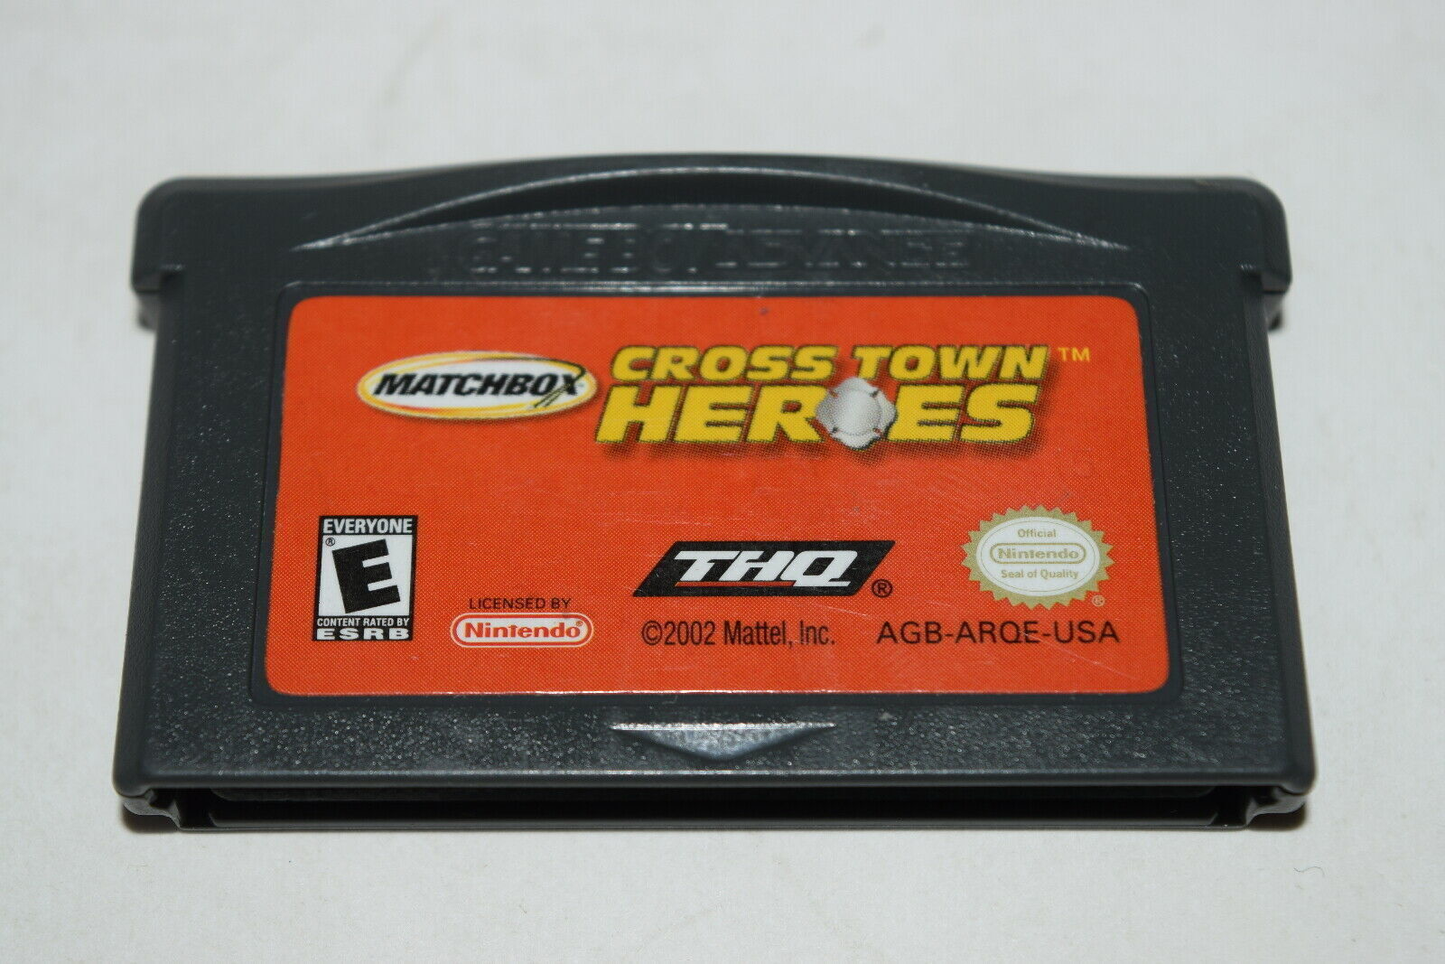 Matchbox: Cross Town Heroes - Game Boy Advance